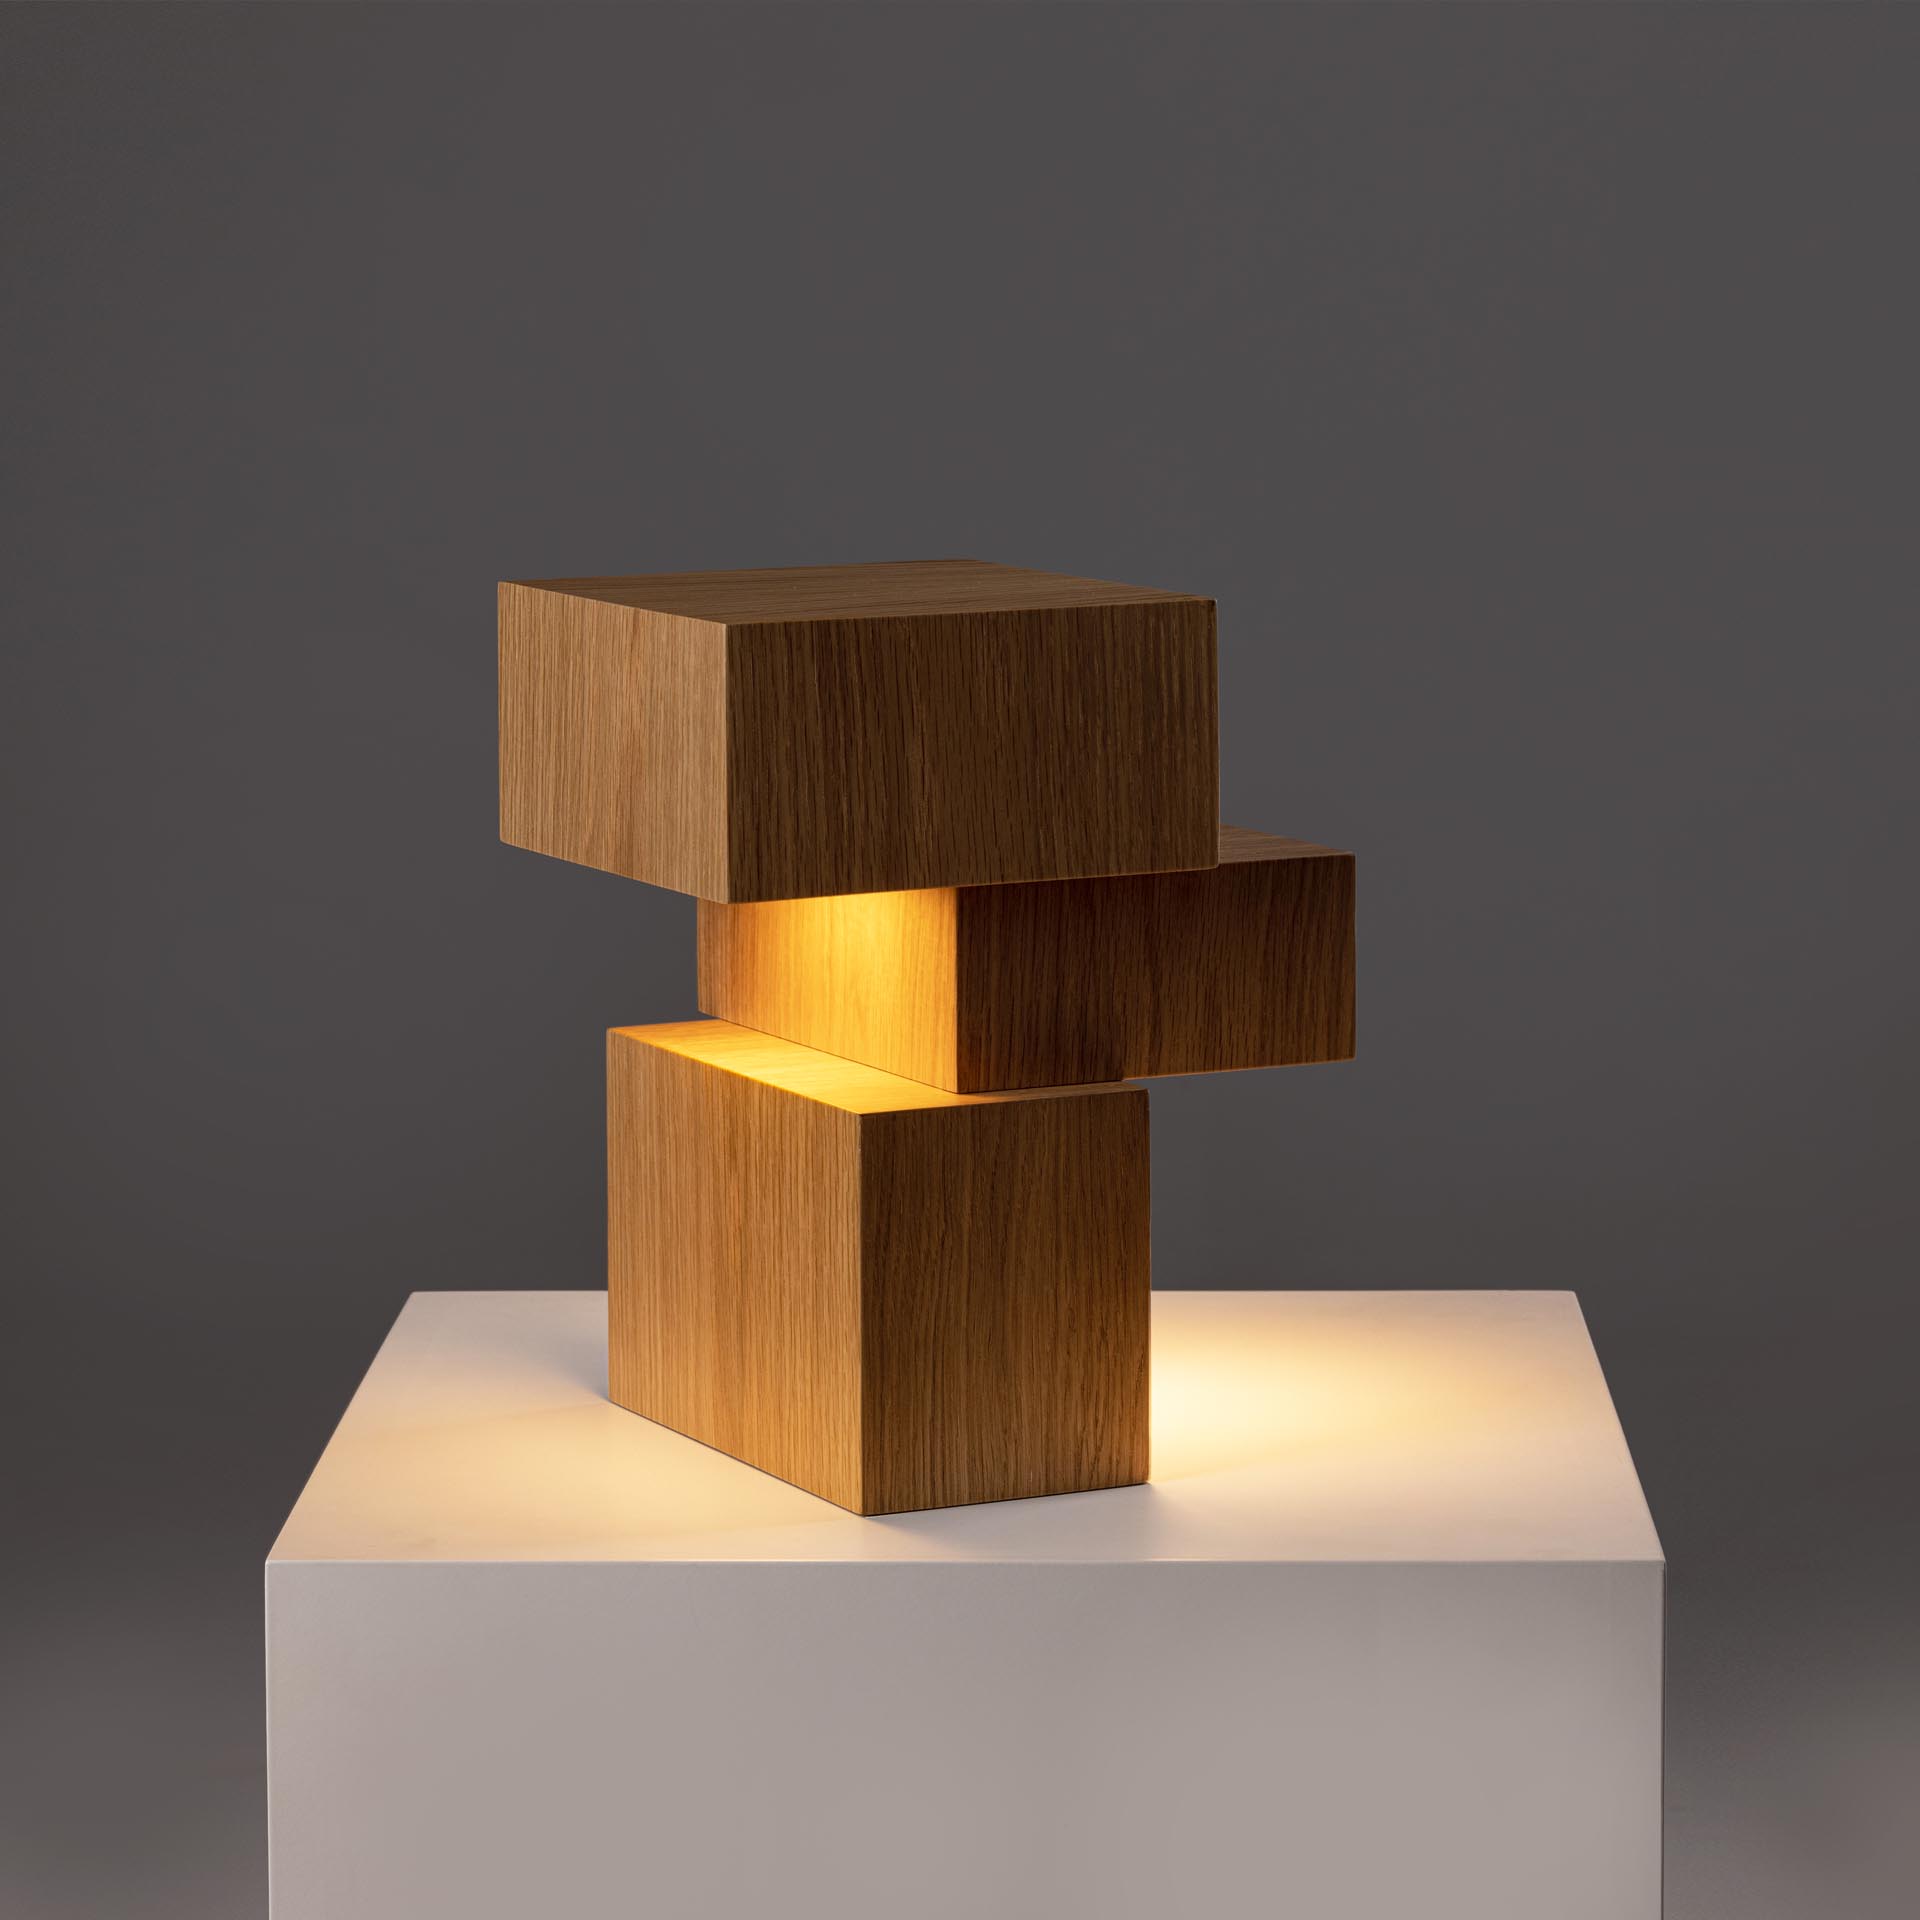 Cubes Lighting by Monica Pinto de Almeida